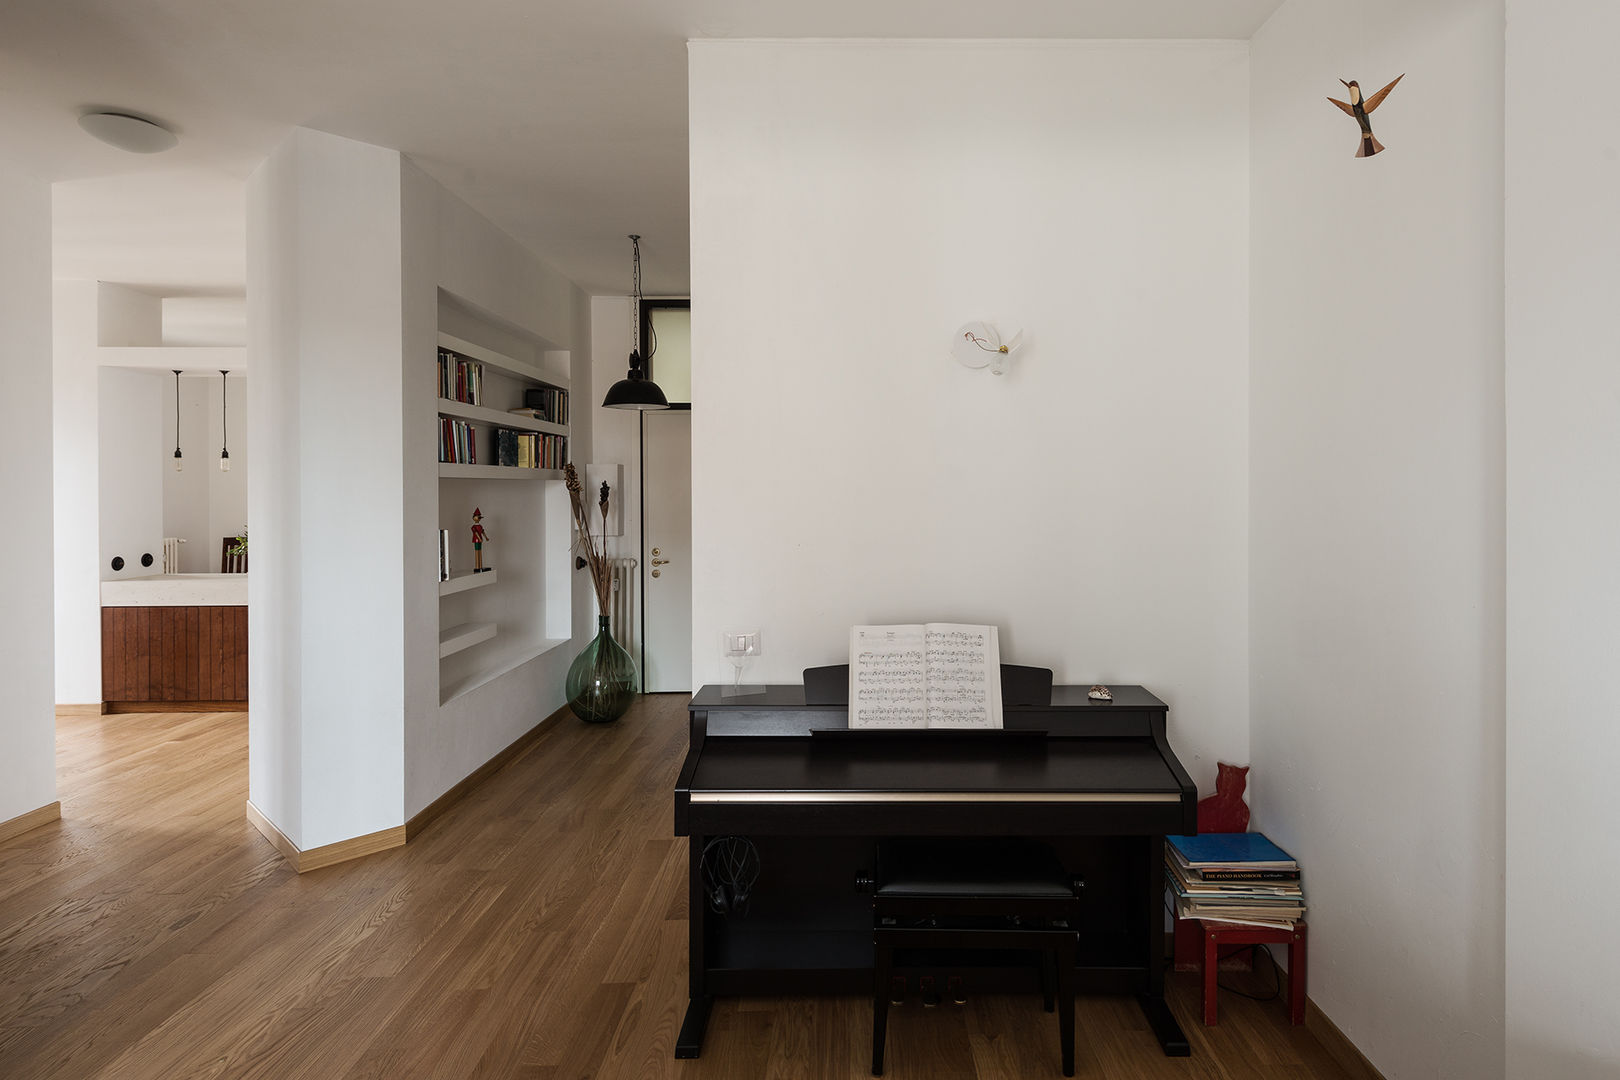 Woodboard House: Wohnungsrenovierung mit Charme, Atelier Blank Atelier Blank الممر والمدخل